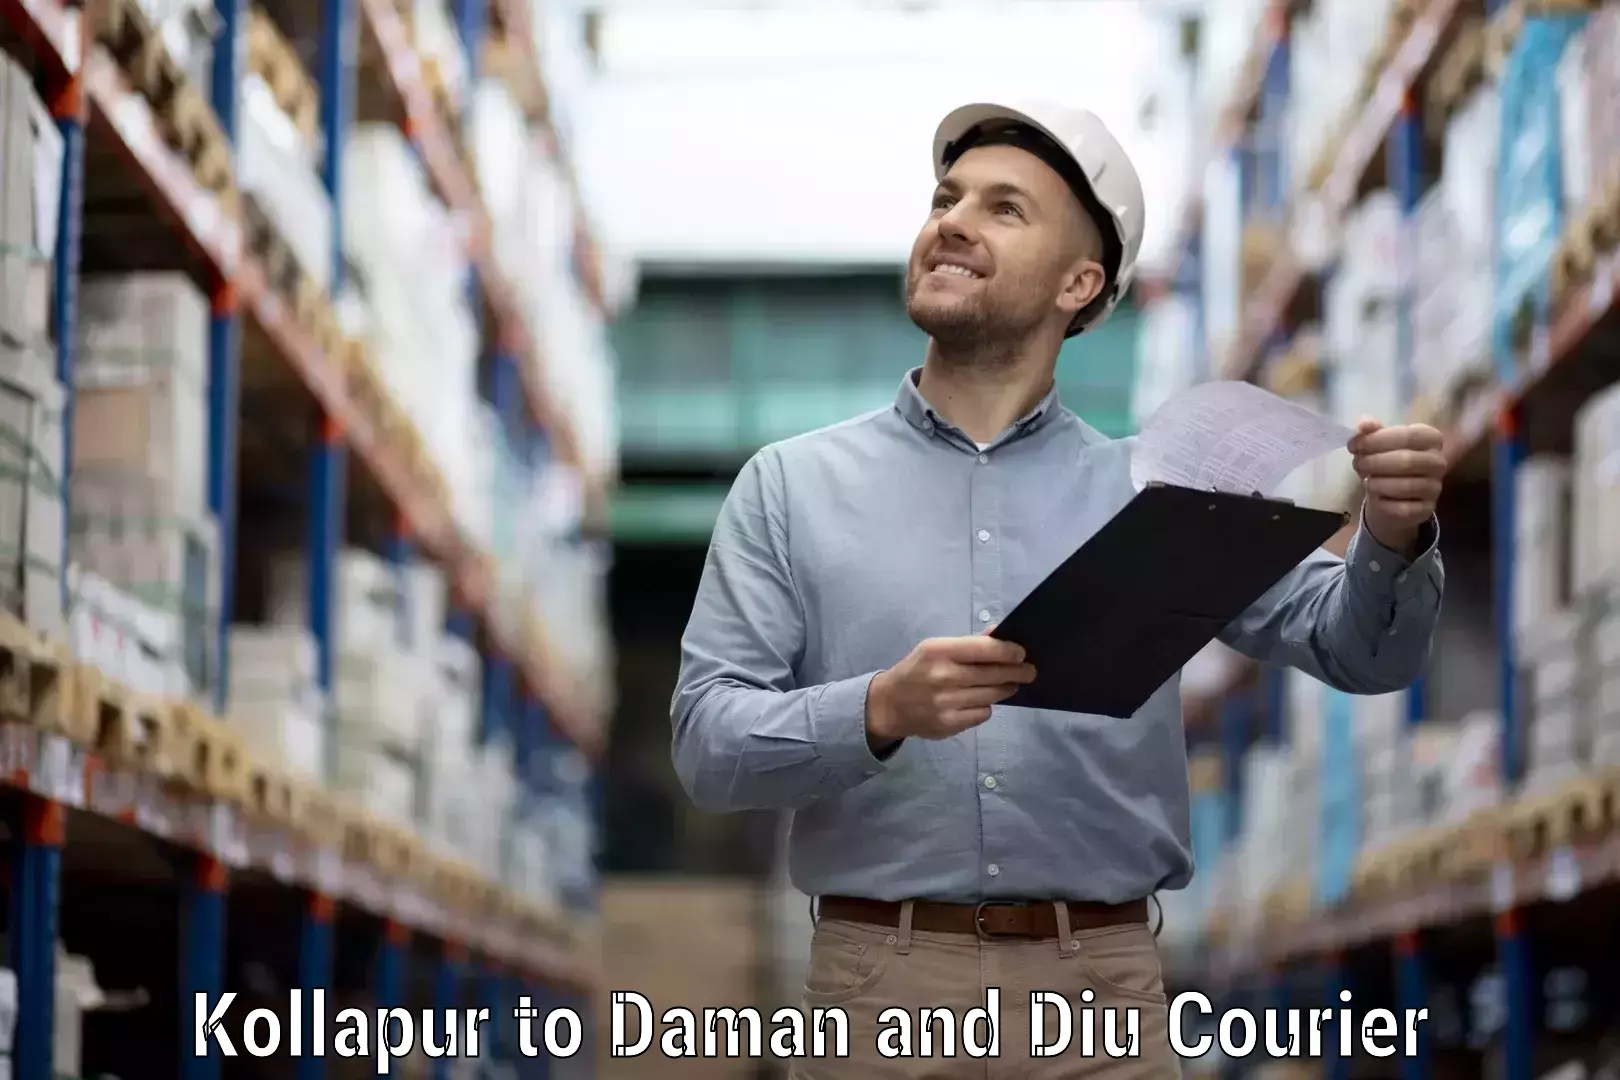 Courier service comparison Kollapur to Diu